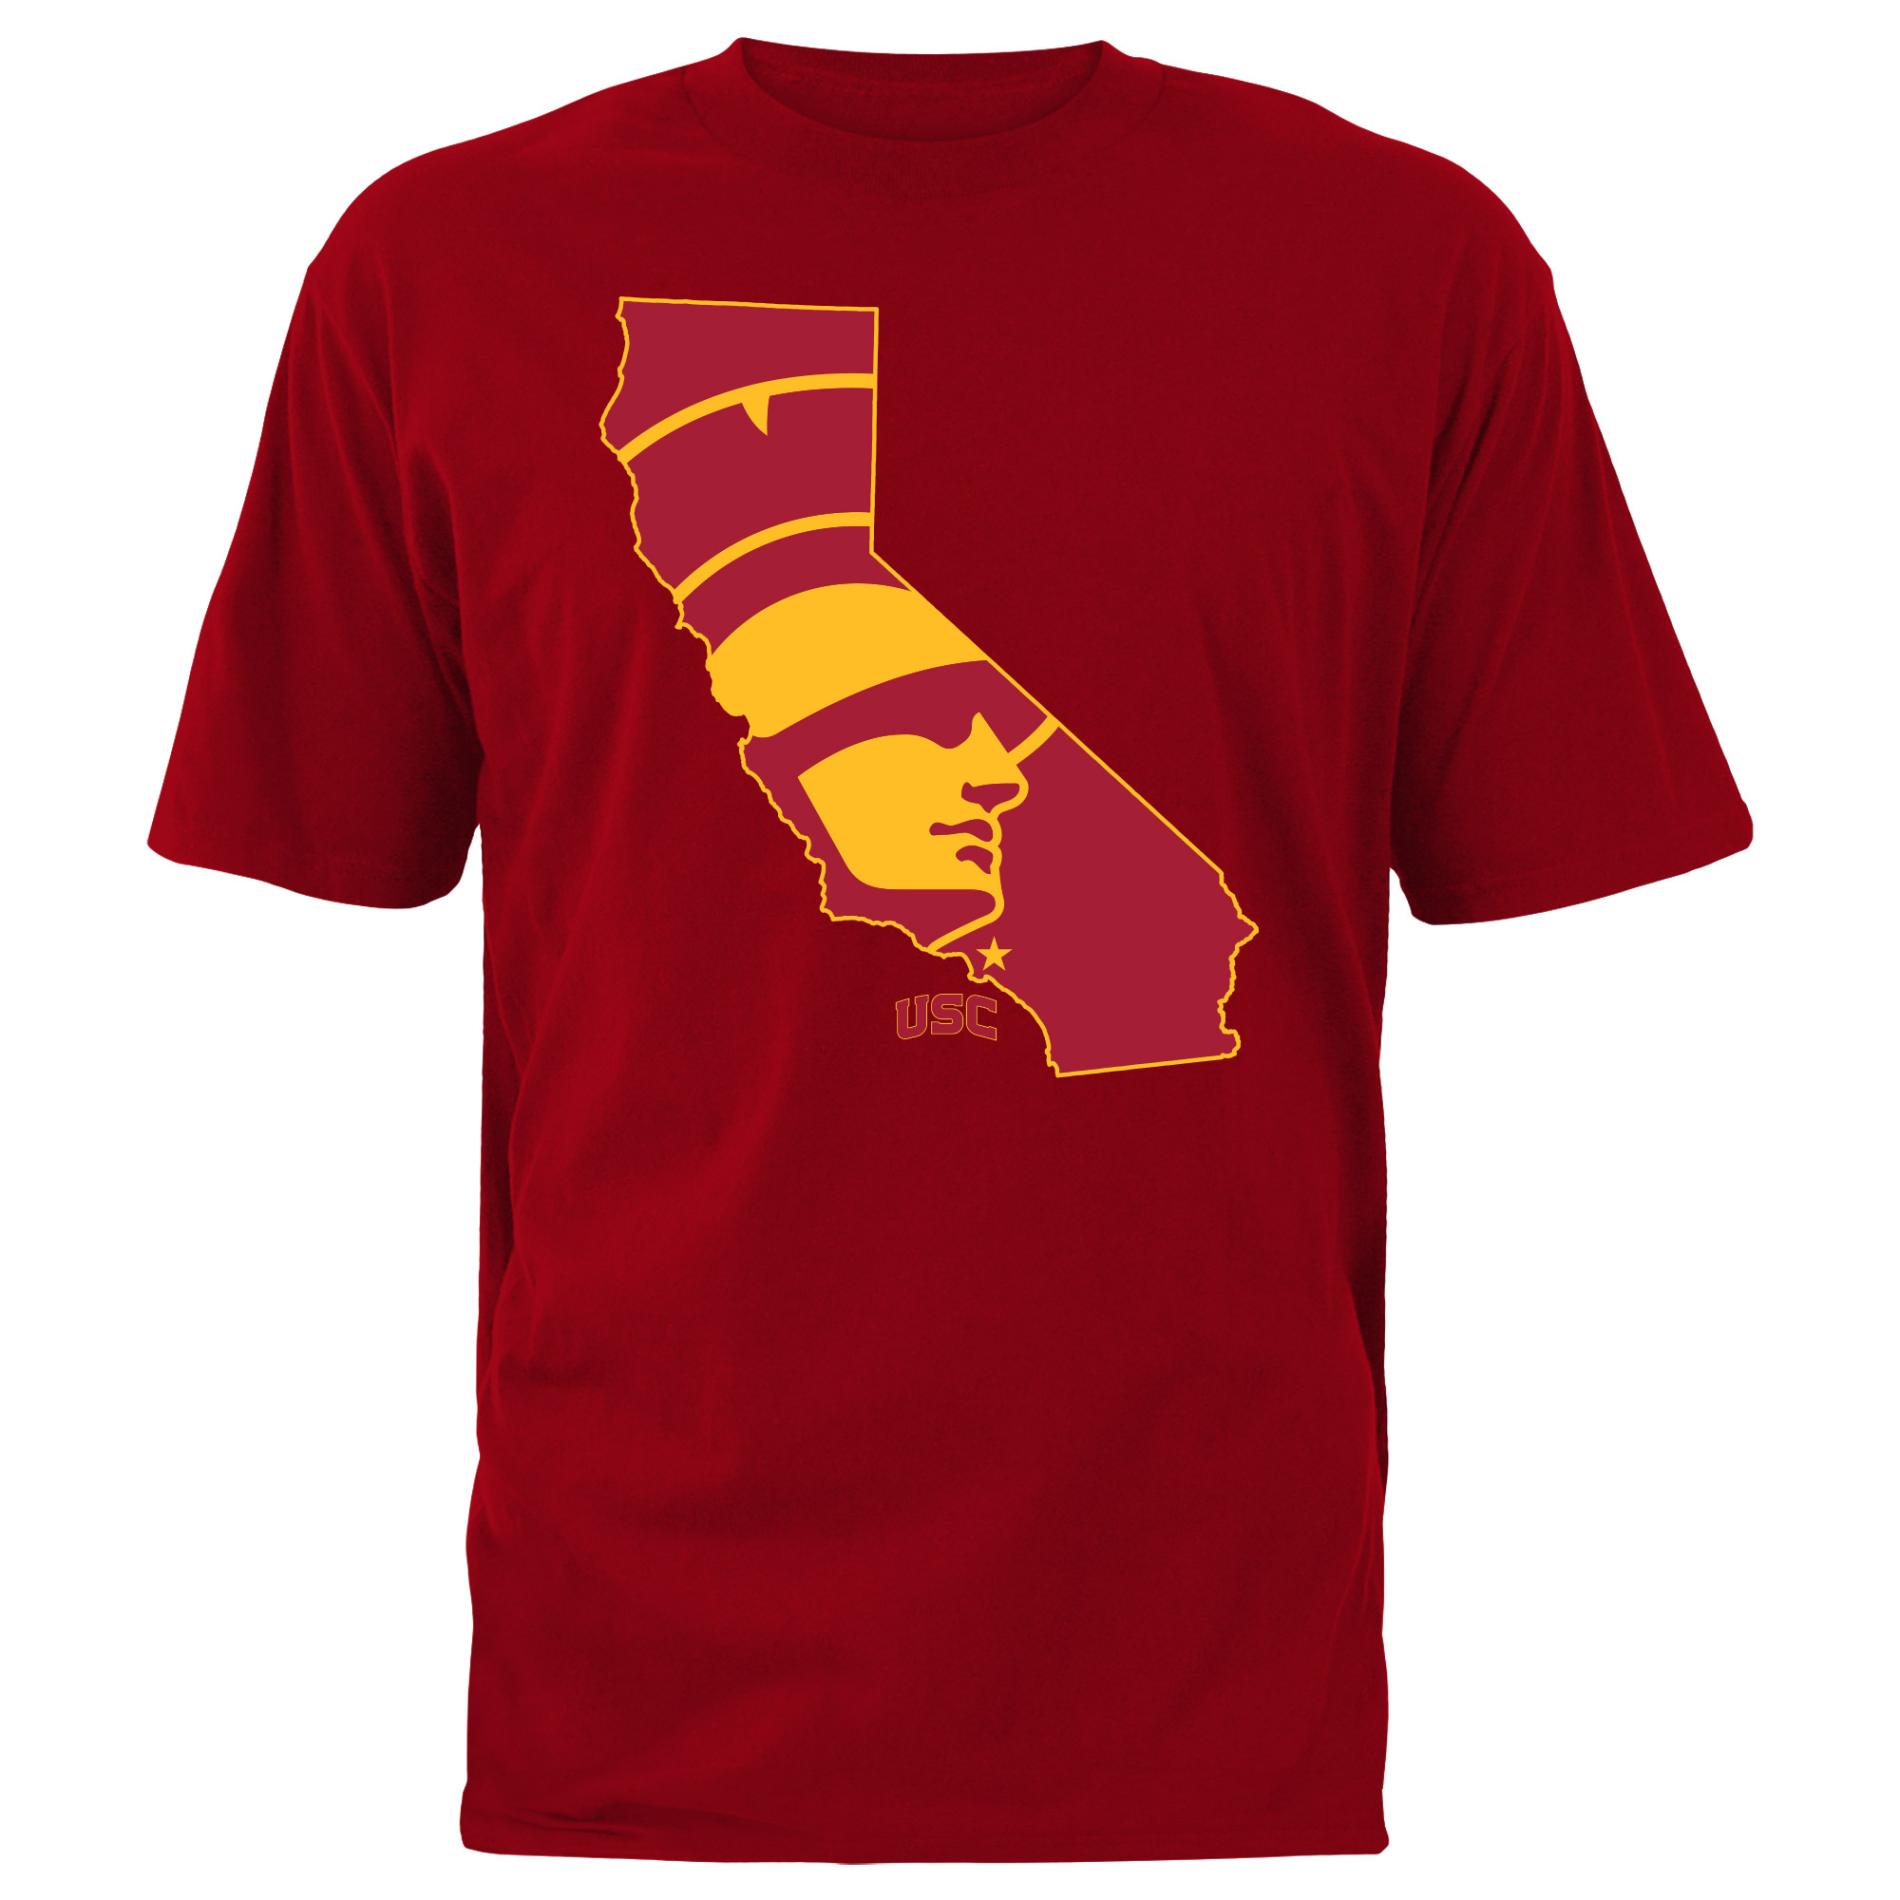 NCAA Men's Graphic T-Shirt - USC Trojans